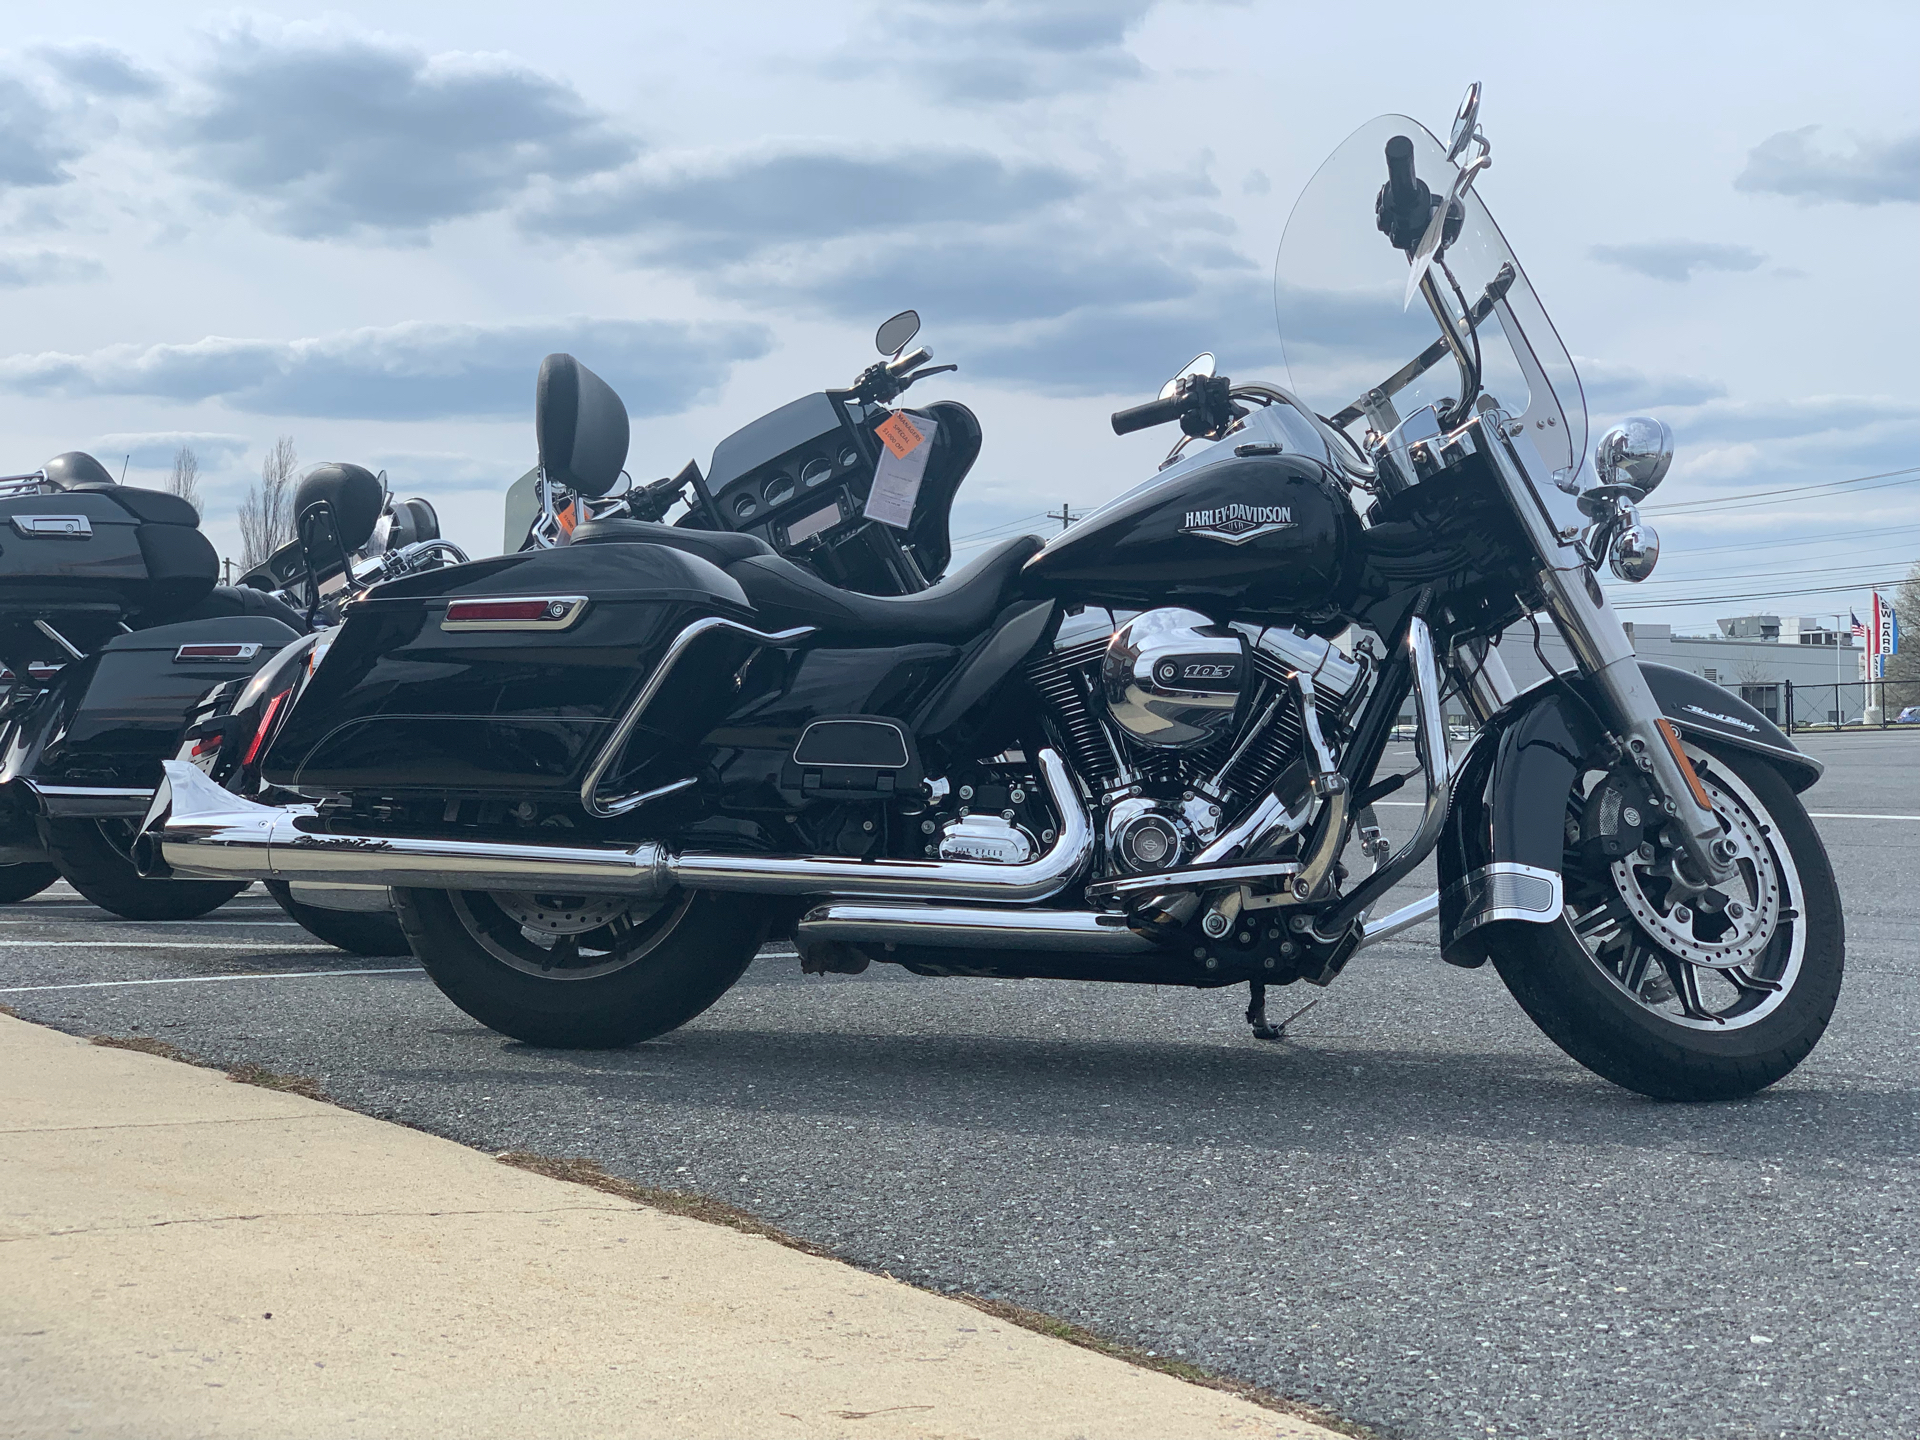 2016 Harley-Davidson Road King® in Frederick, Maryland - Photo 2